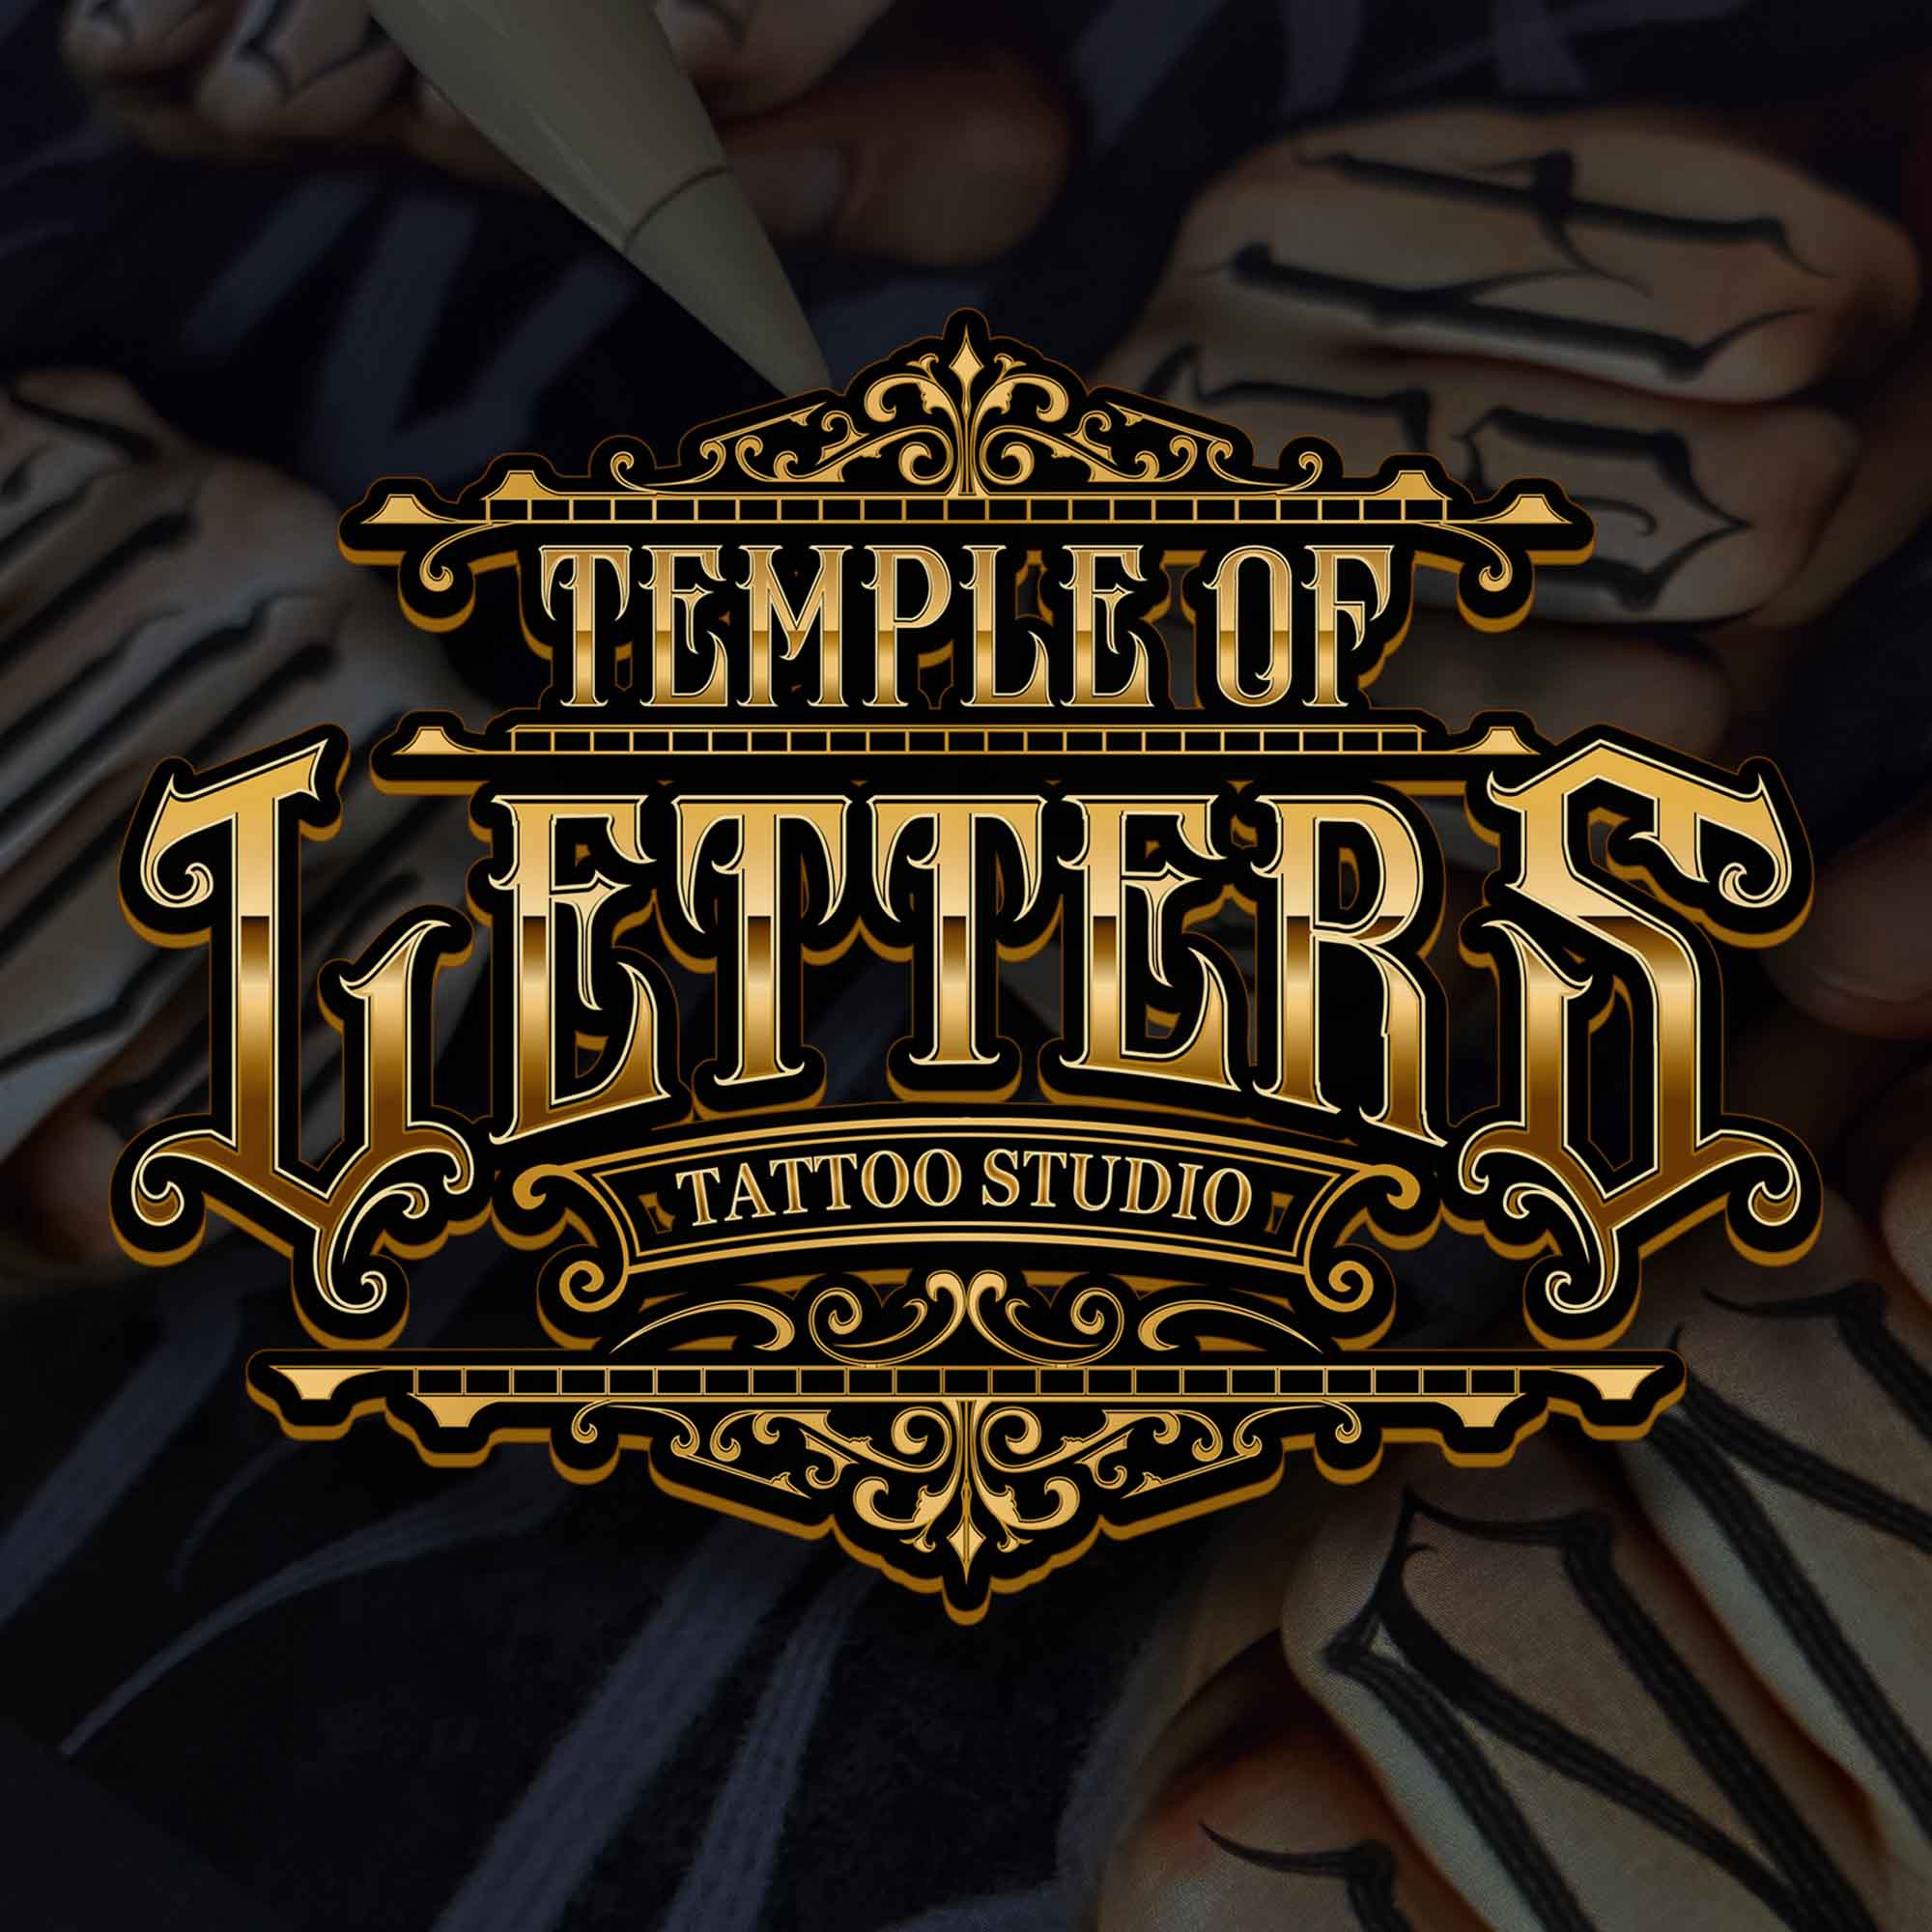 Tattoo Studio Emblem with Skull and Tattoo Machines, Vectors | GraphicRiver